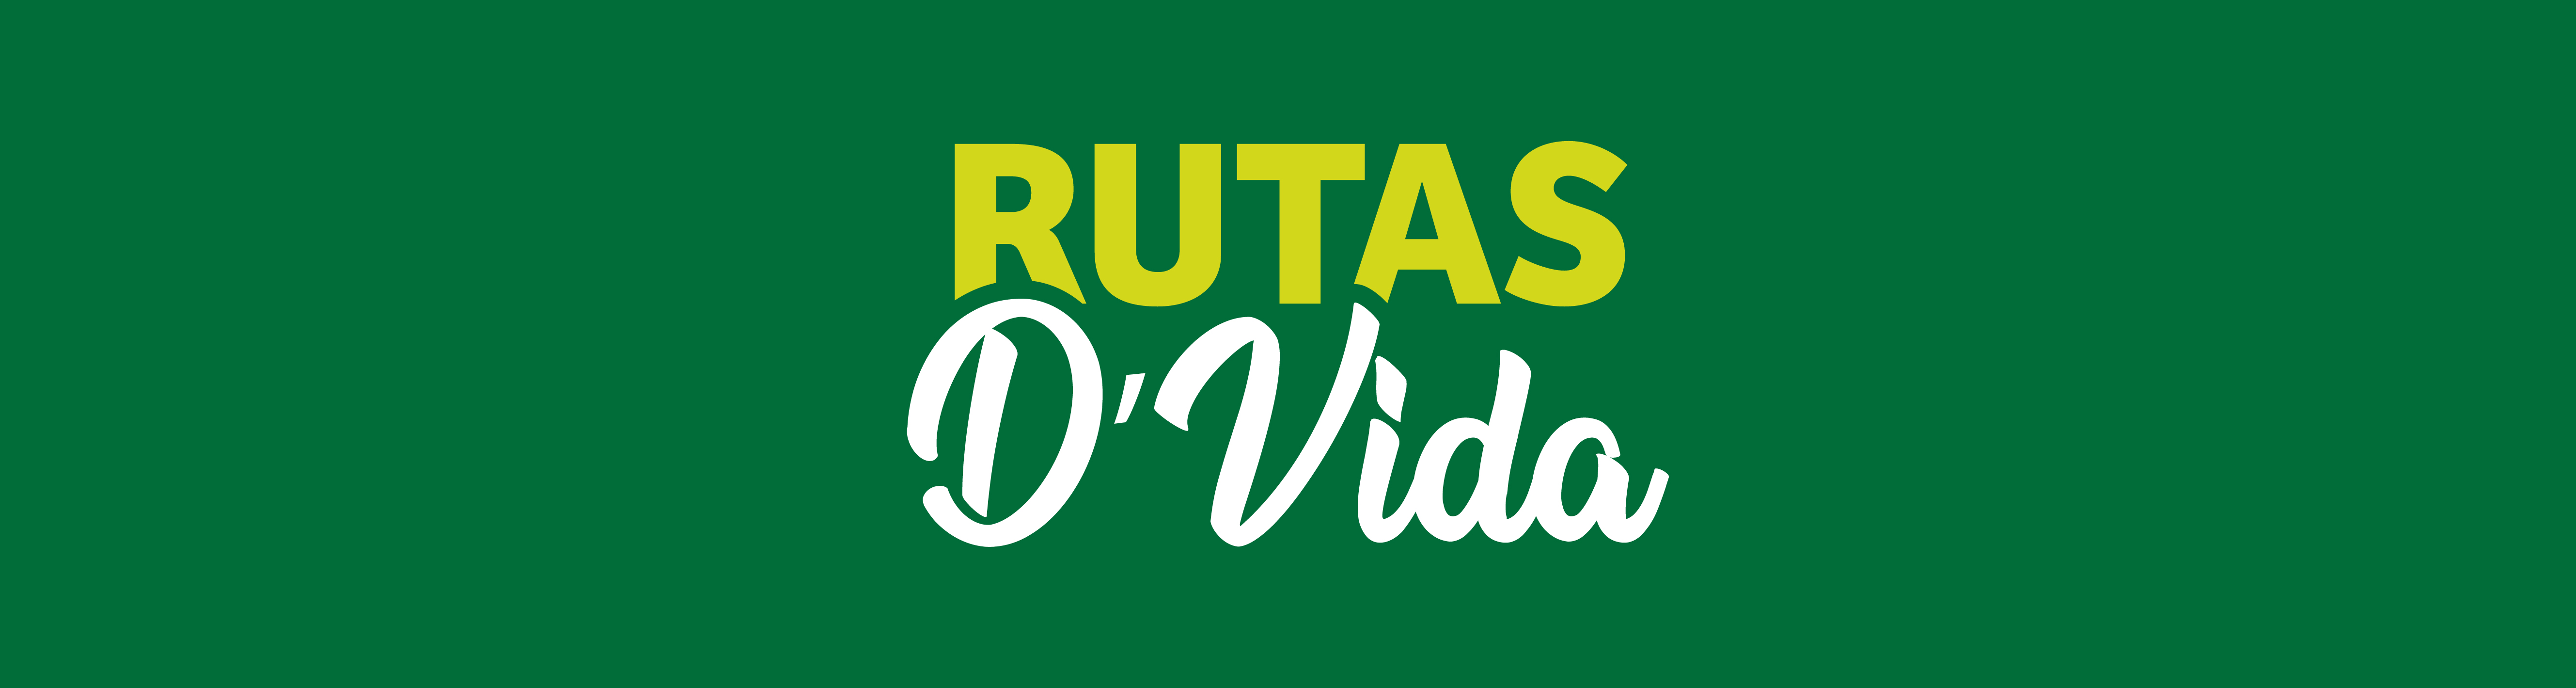 RutasDVida02